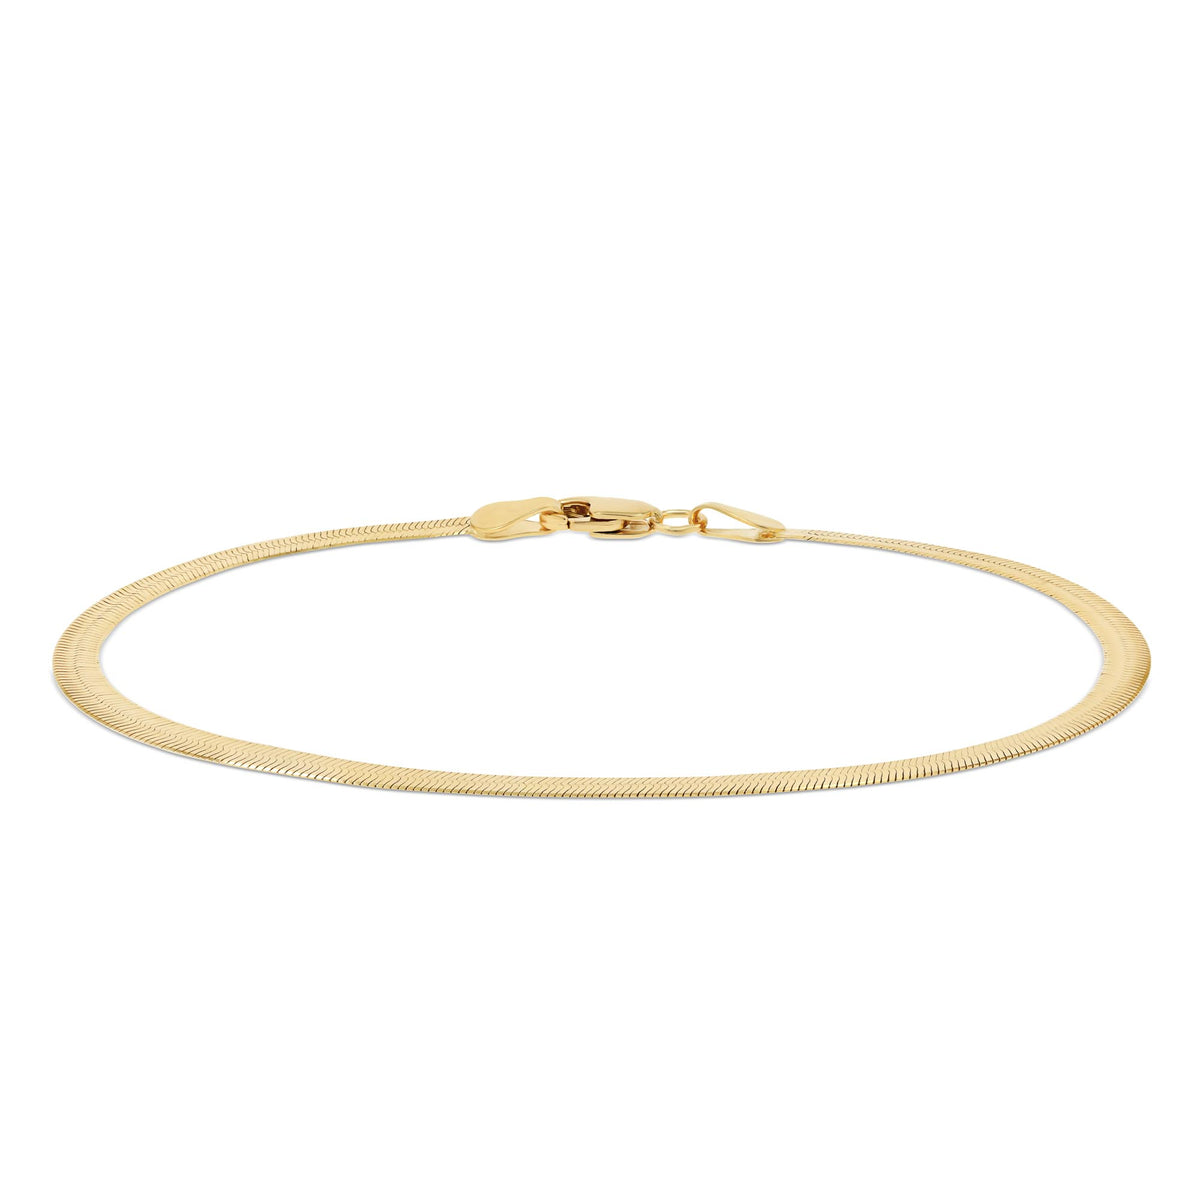 Herringbone Bracelet 7in in 14K Yellow Gold|herringbone bracelet shown in 14k yellow gold metal in 7in chain